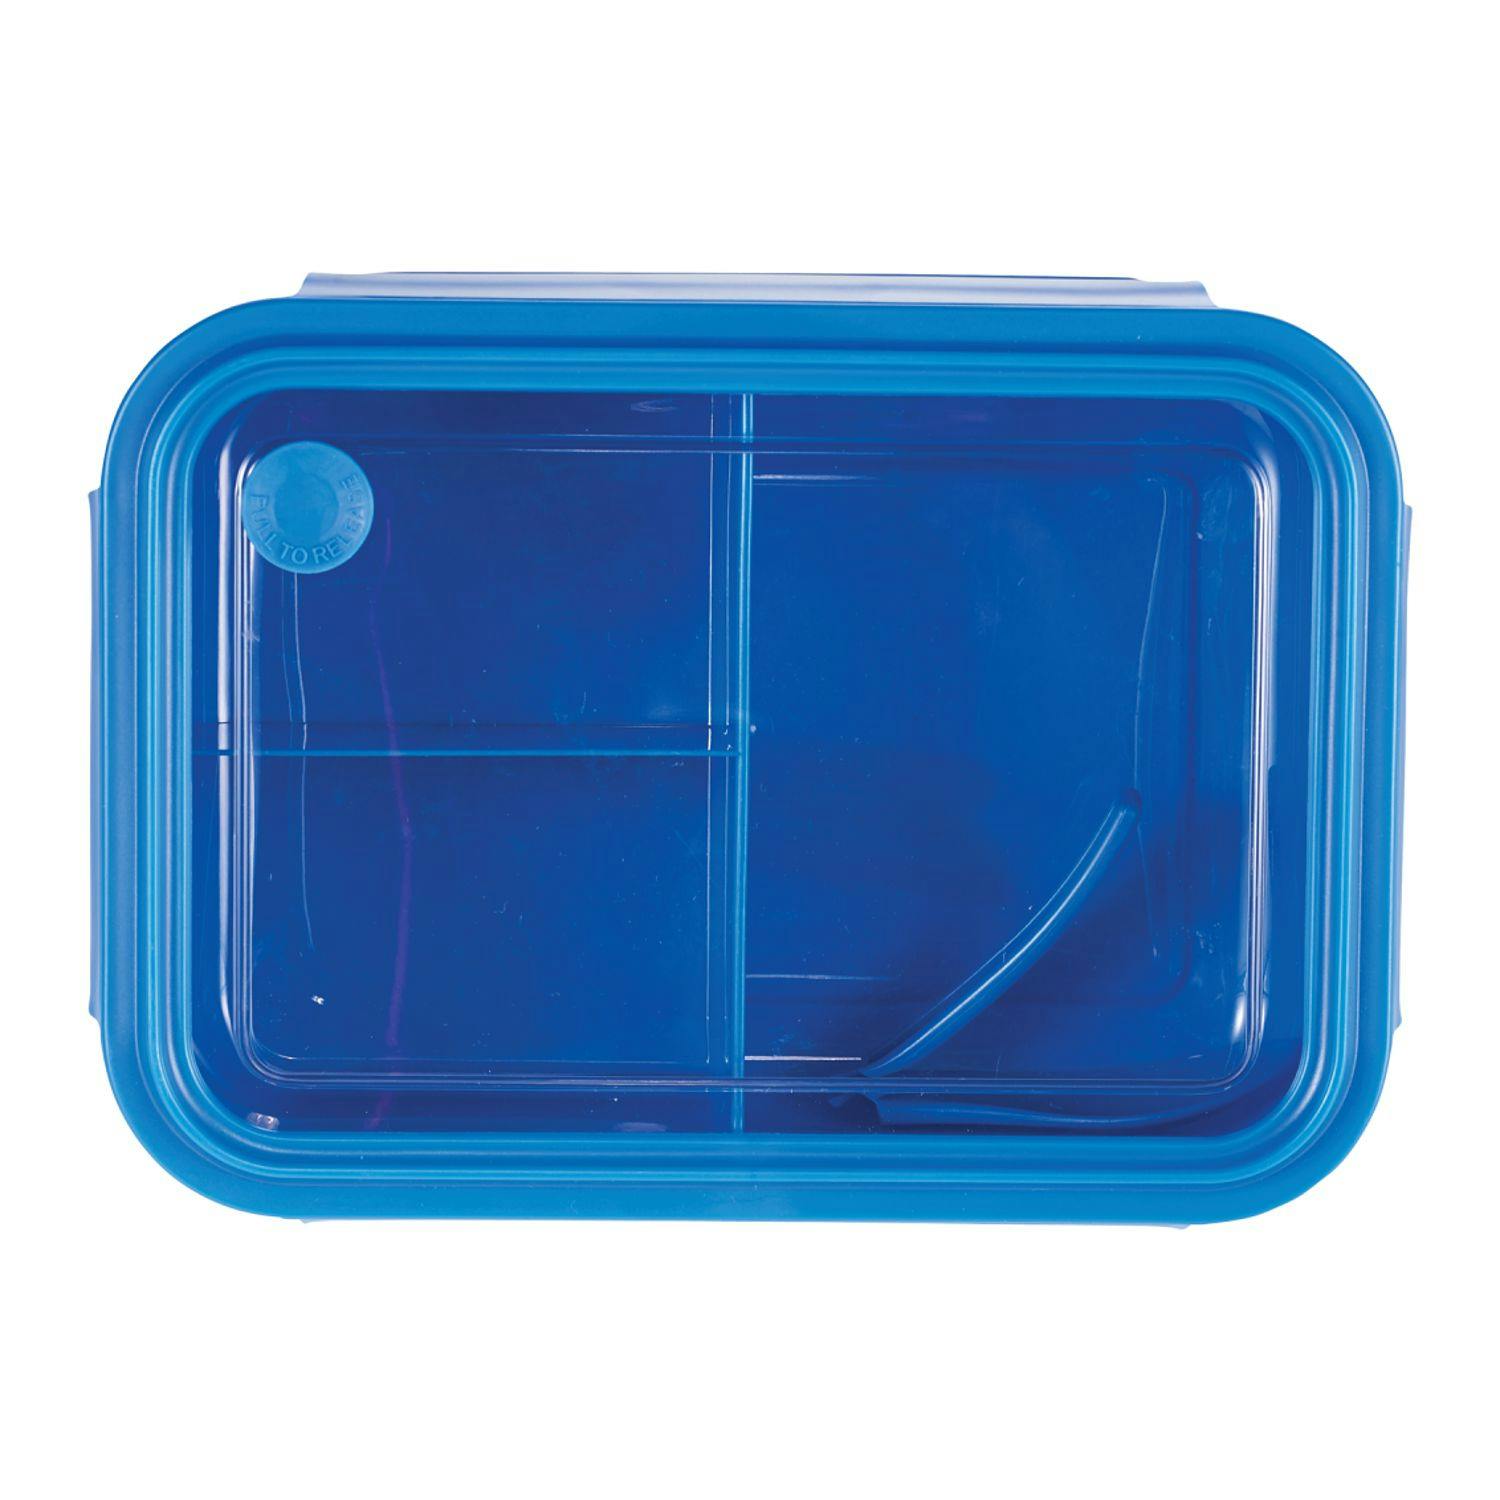 Three Compartment Food Storage Bento Box - additional Image 1